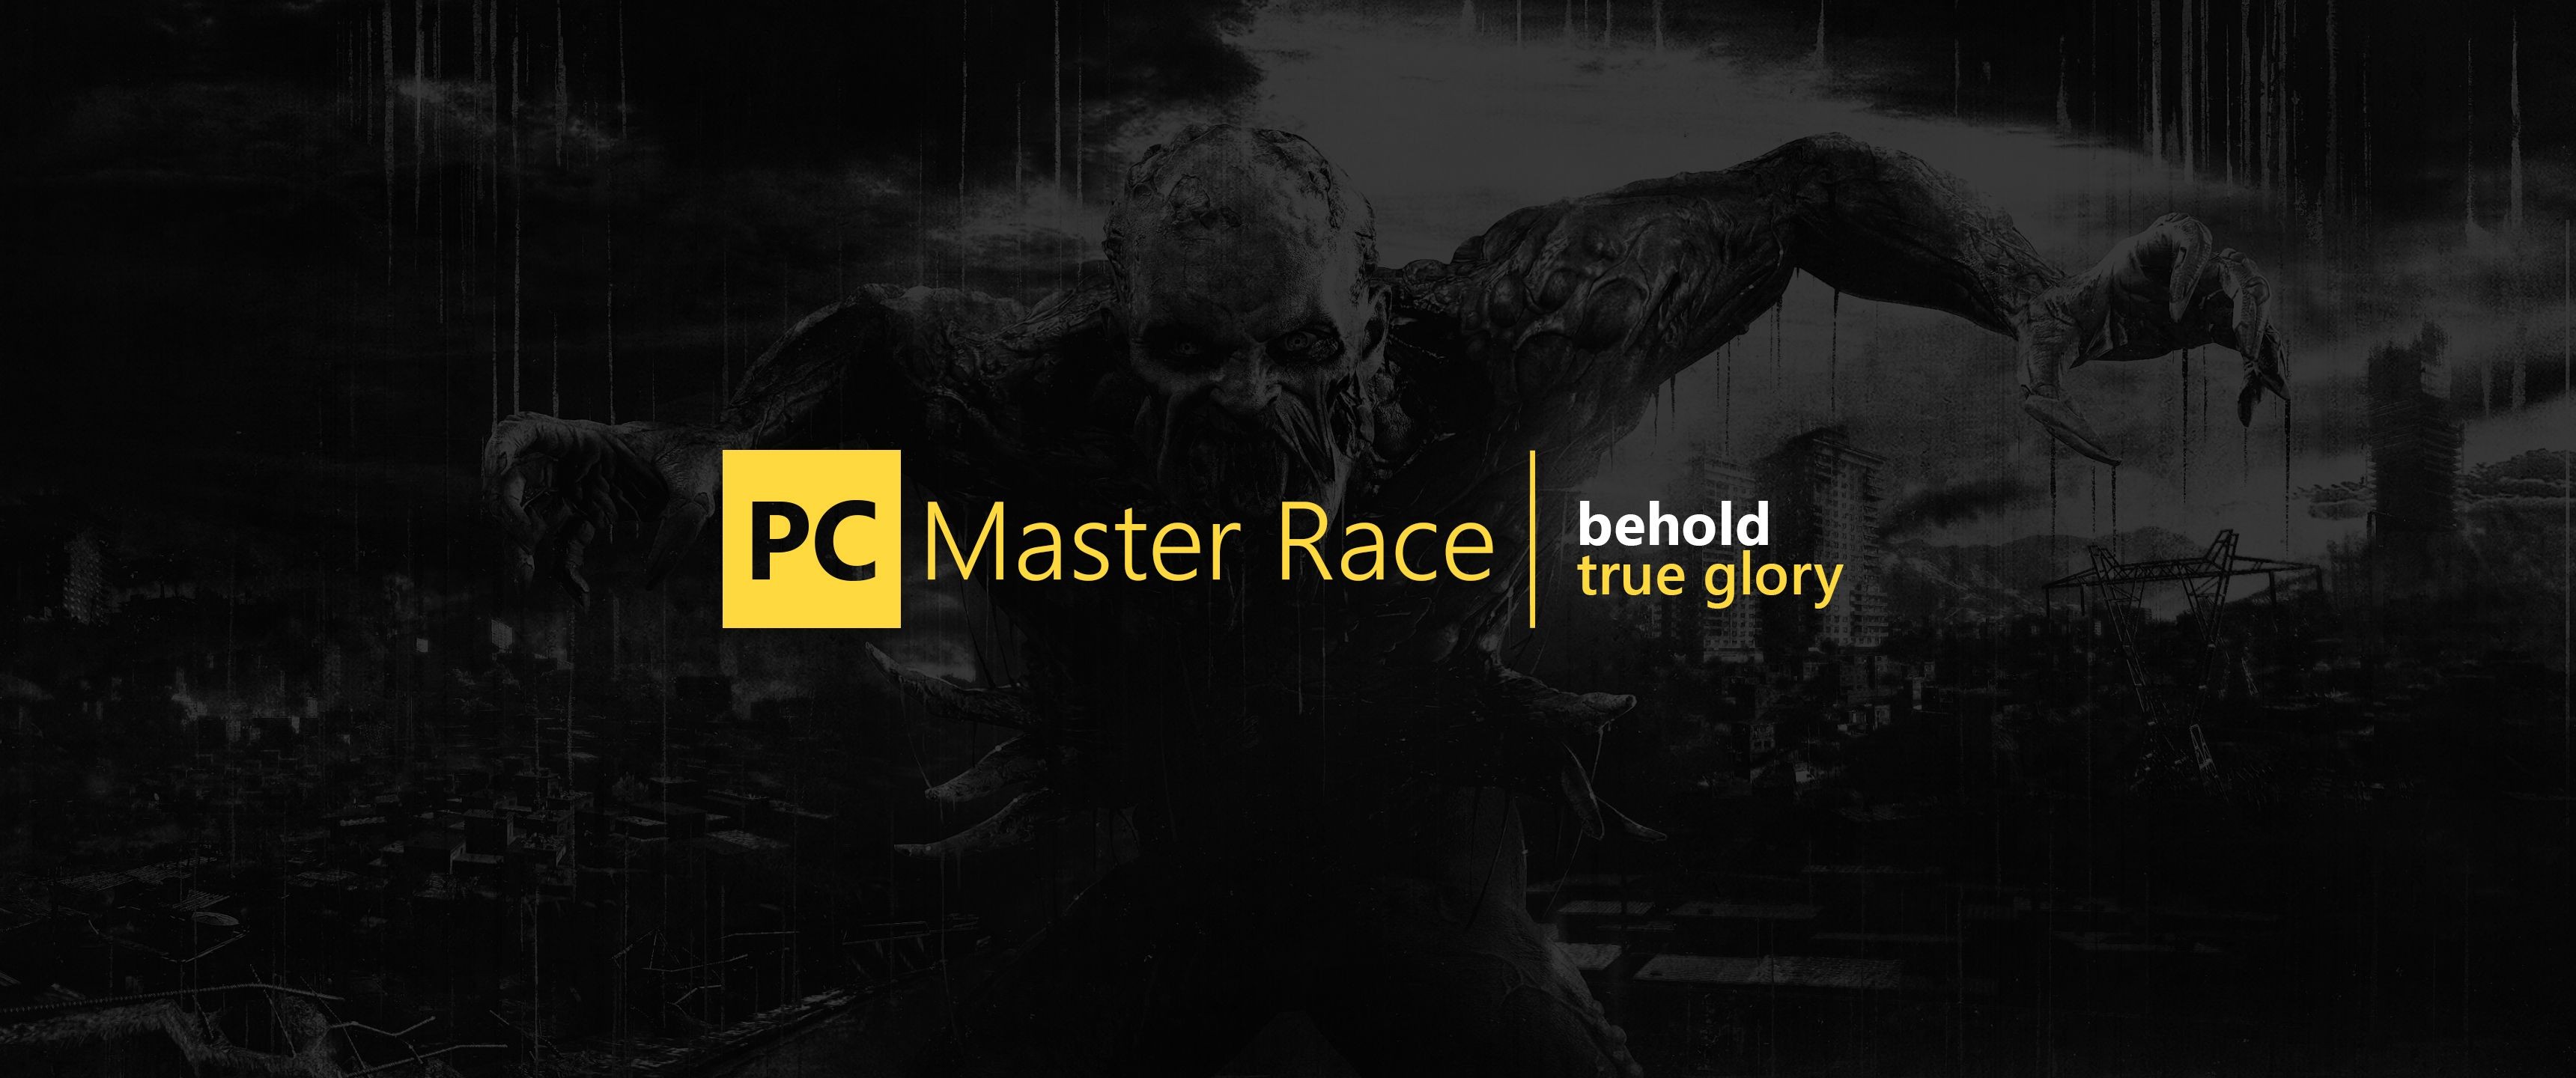 General 3440x1440 PC gaming PC Master  Race logo digital art text